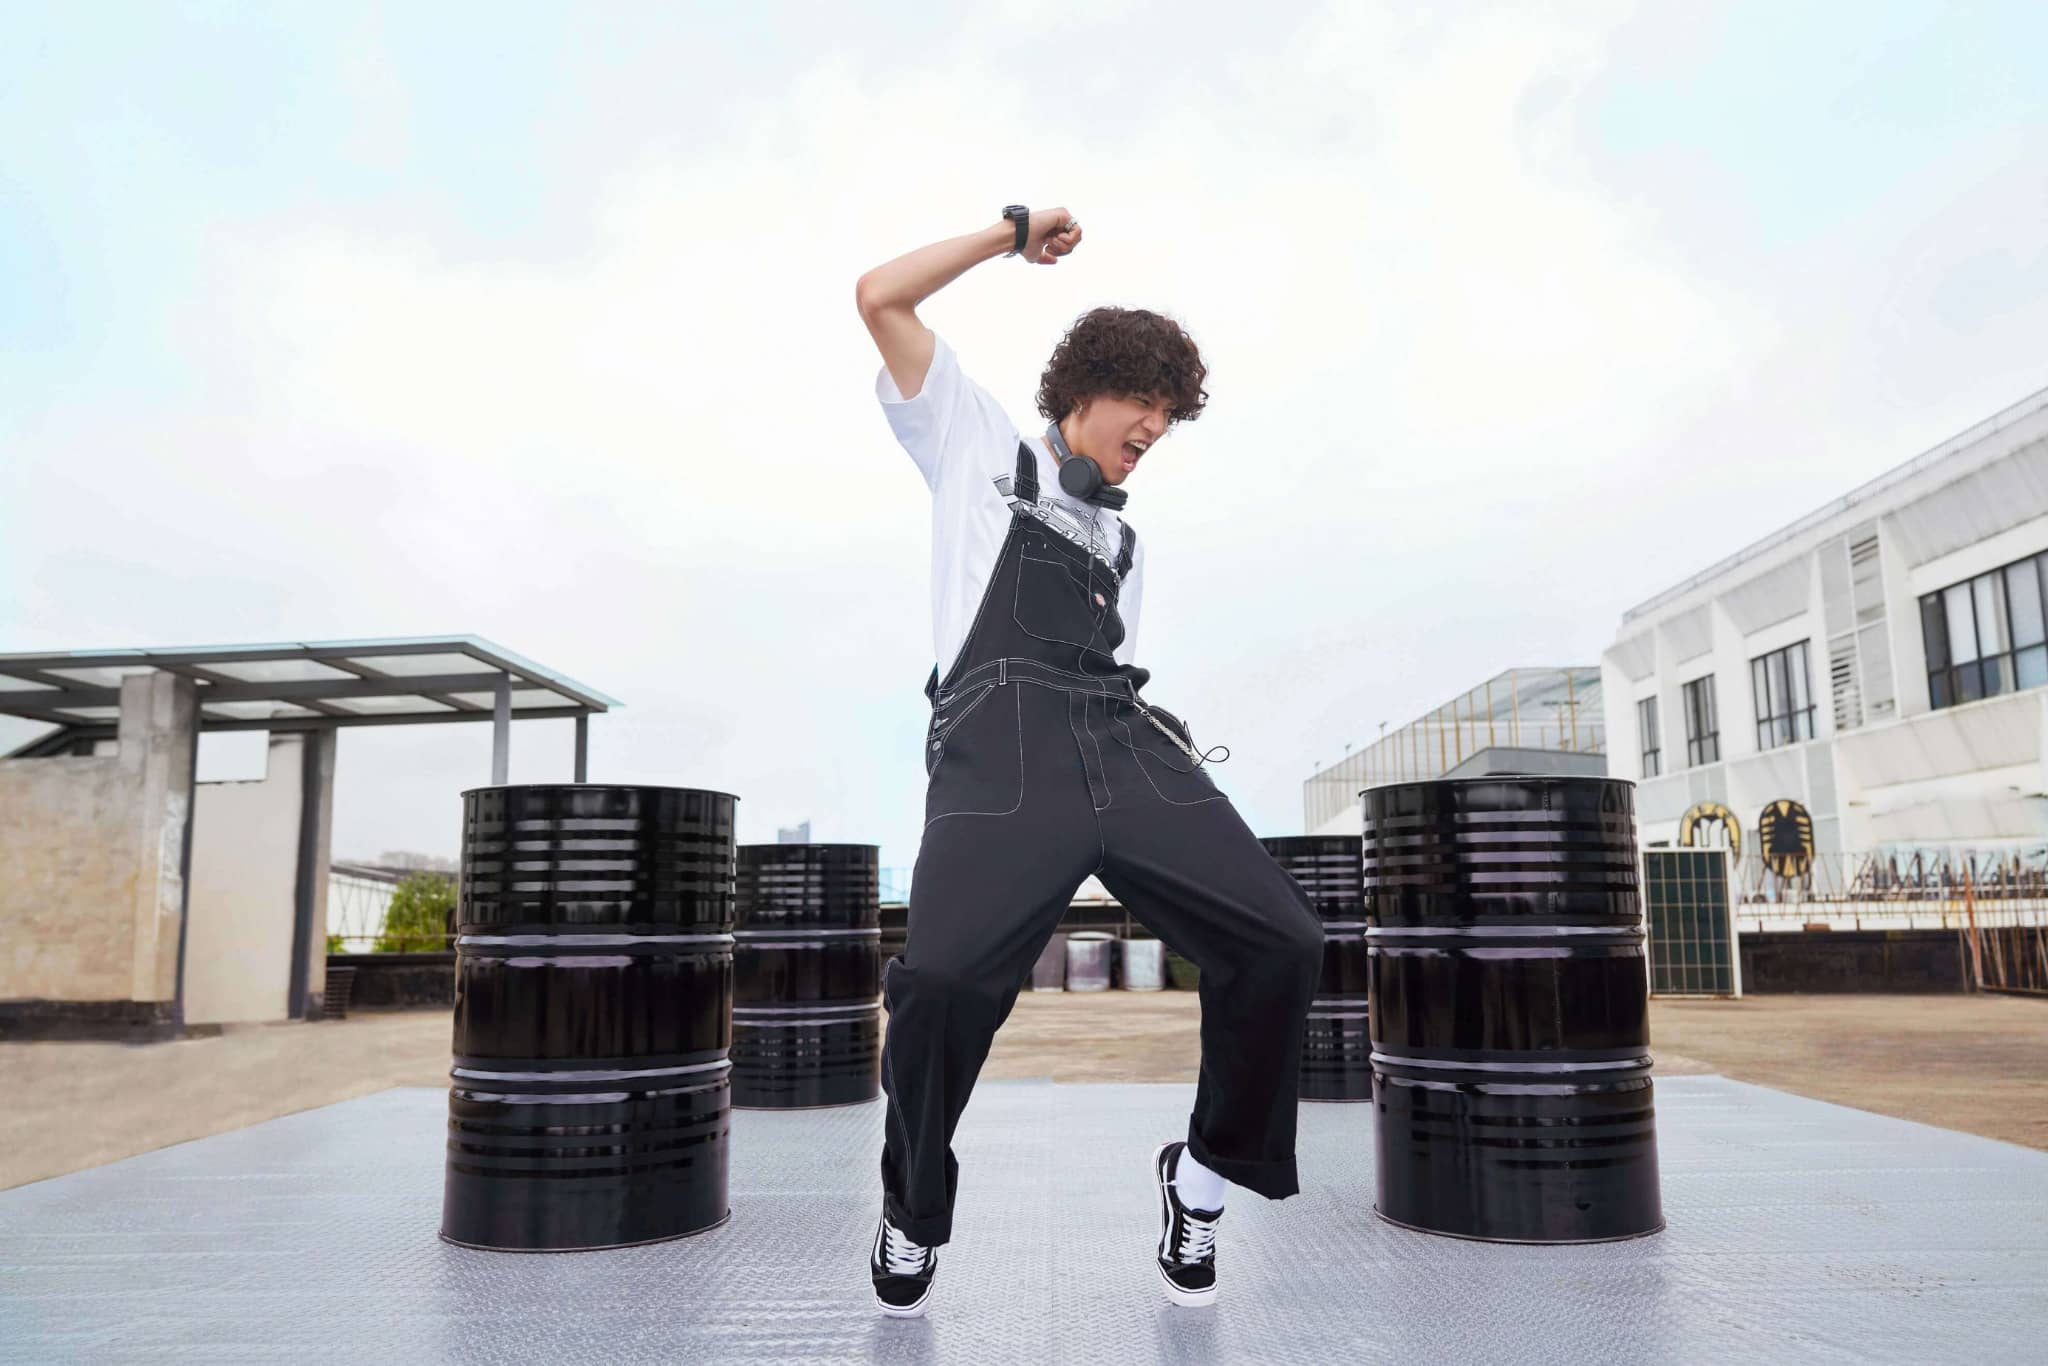 A man in Dickies overalls is dancing in front of barrels.